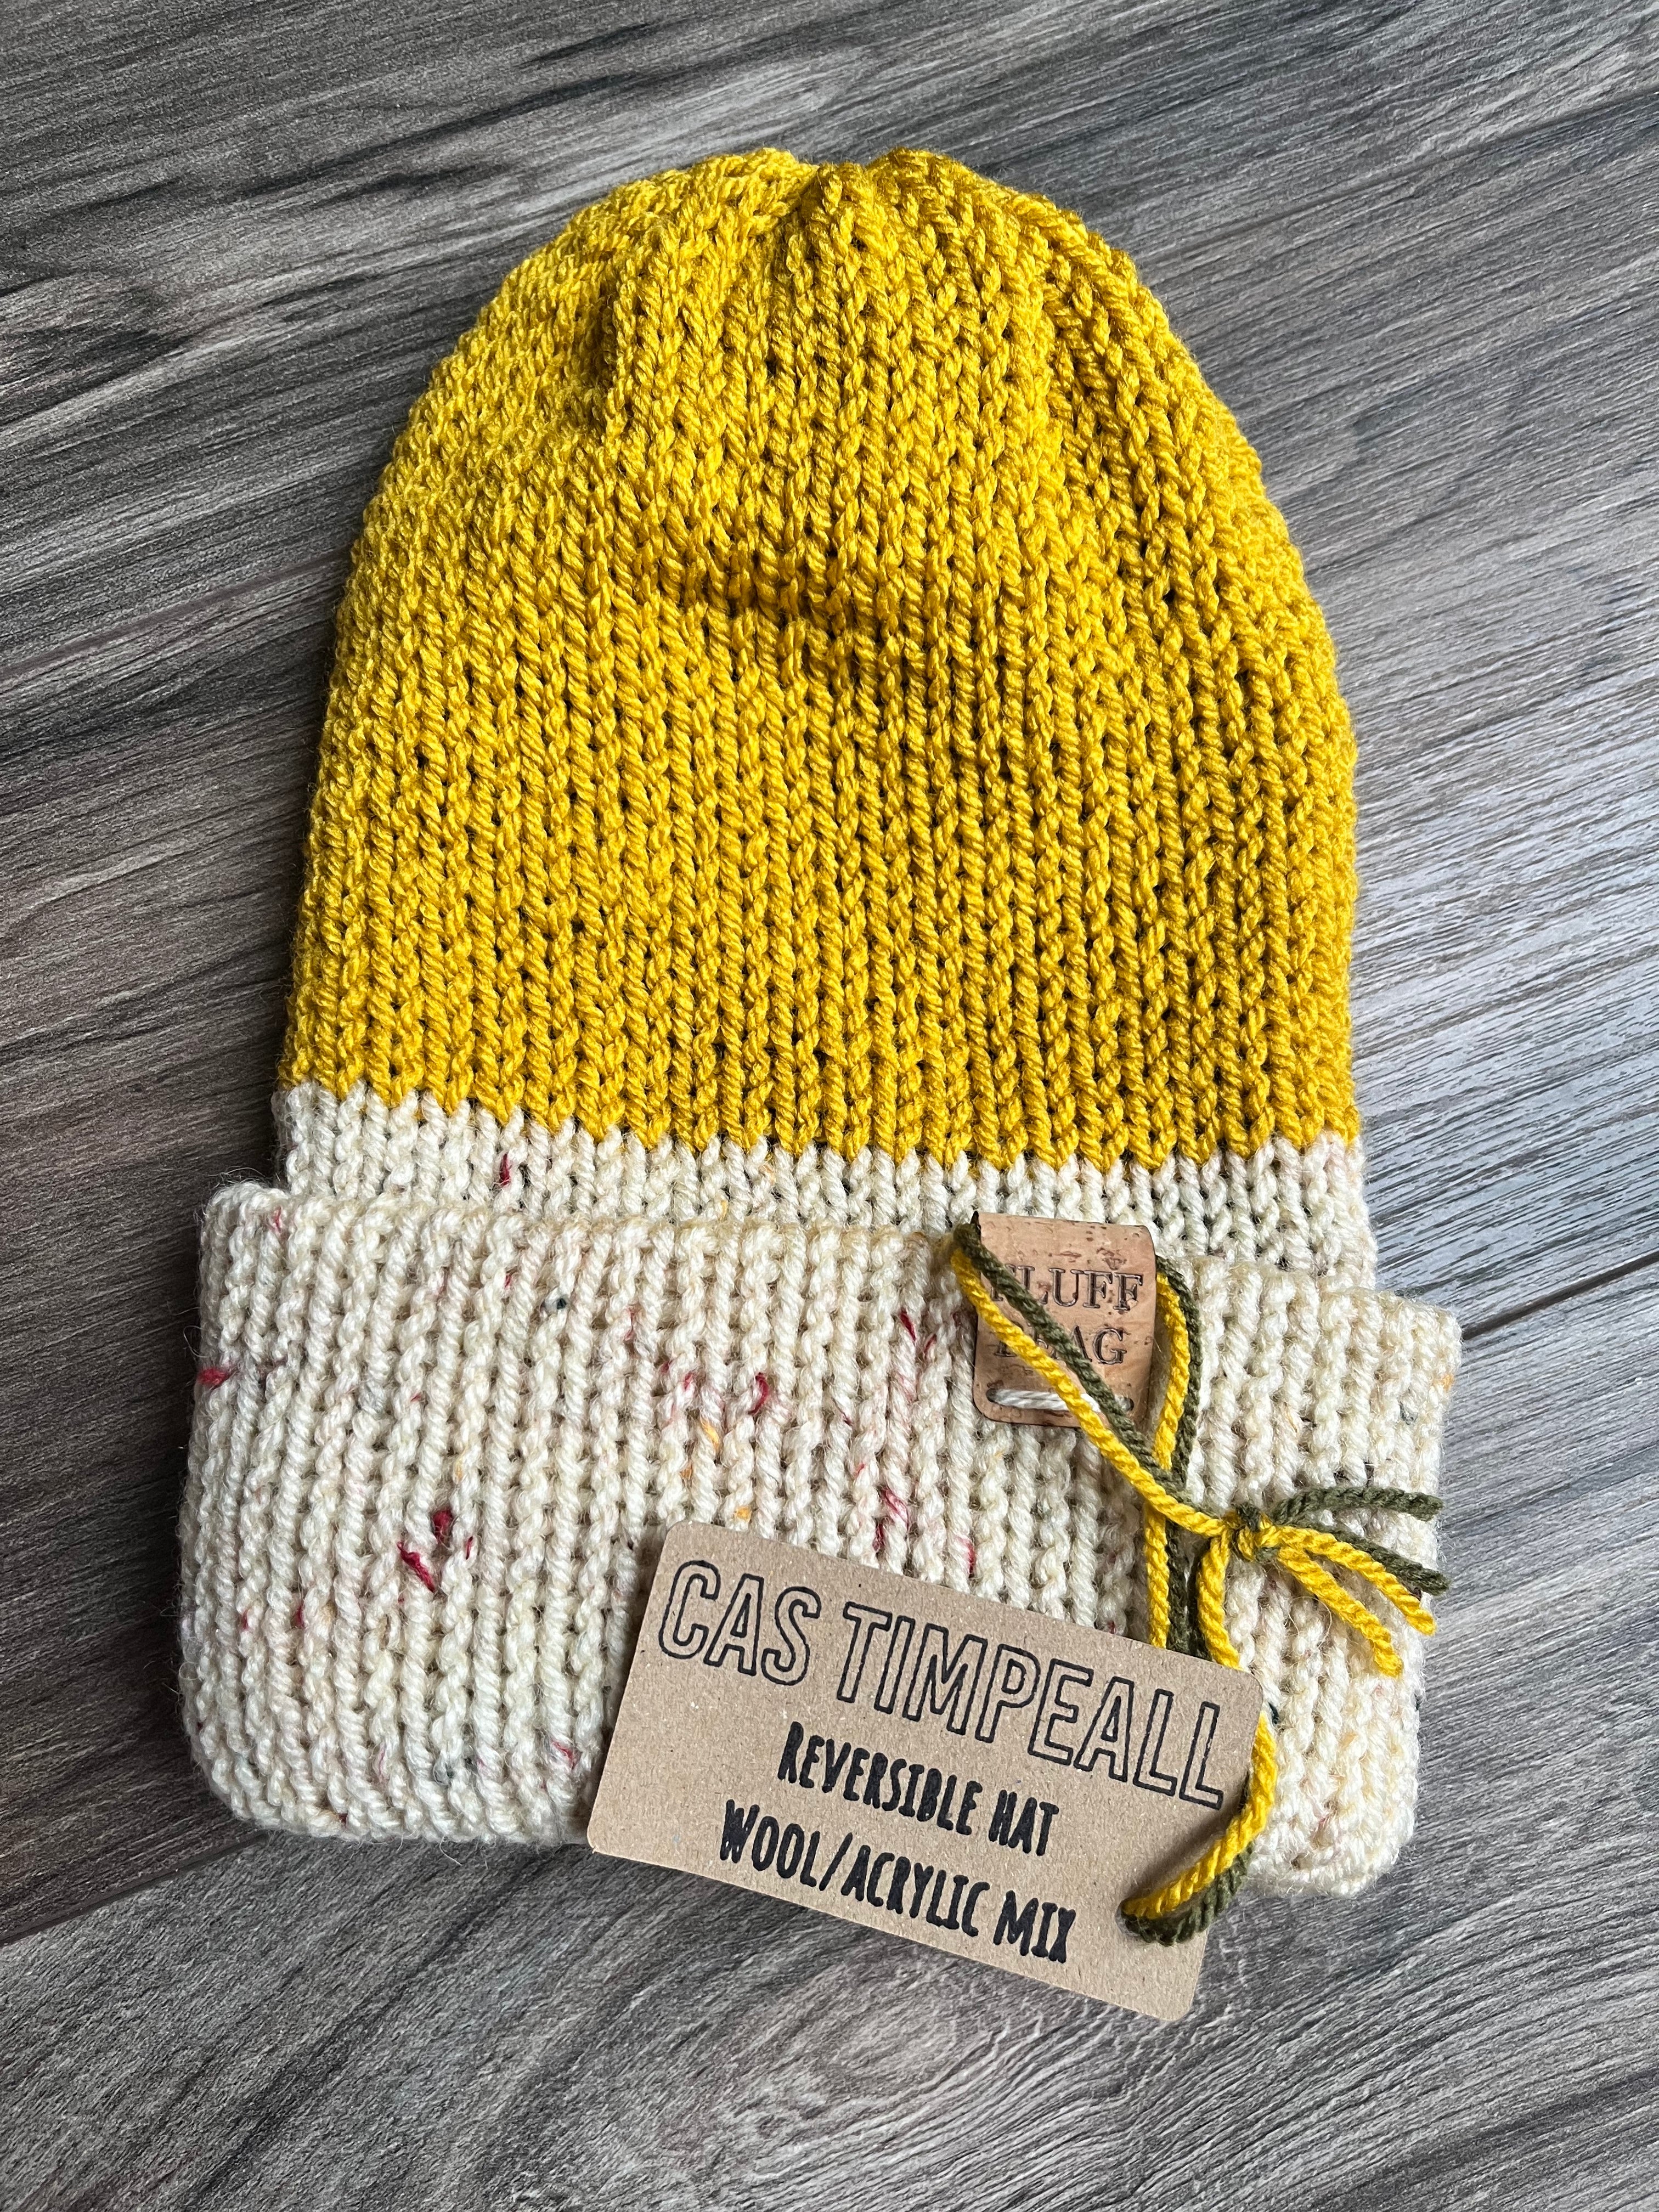 Cas Timpeall Reversible Hat - Mustard / Khaki